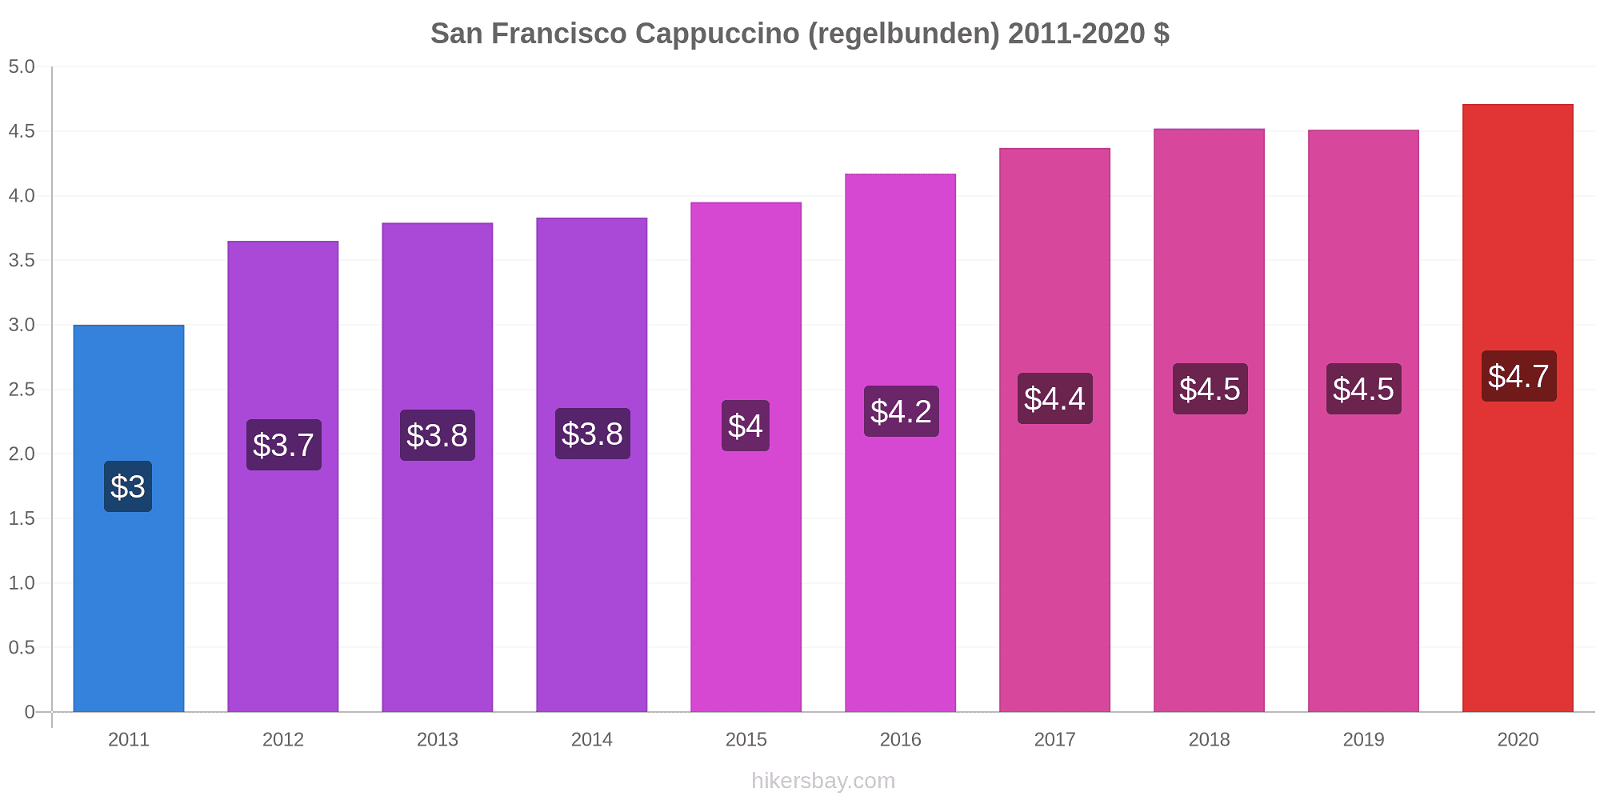 San Francisco prisförändringar Cappuccino (regelbunden) hikersbay.com